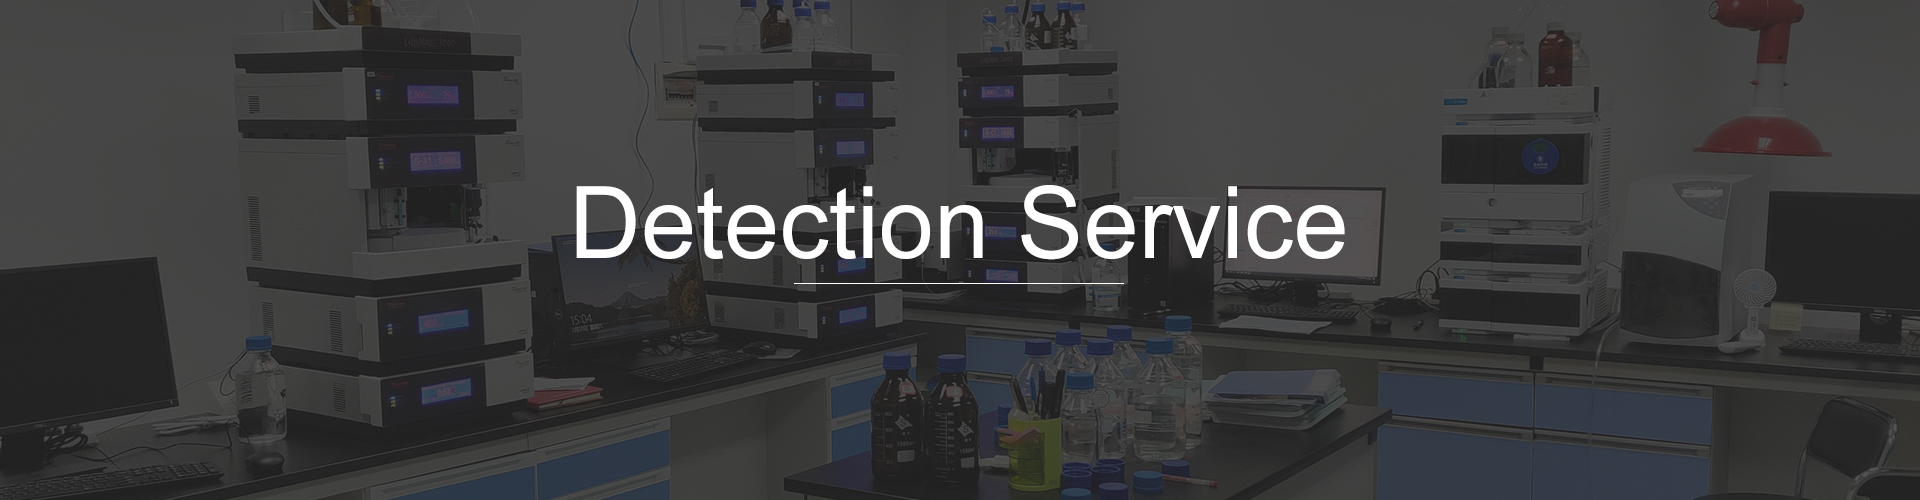 Detection Services